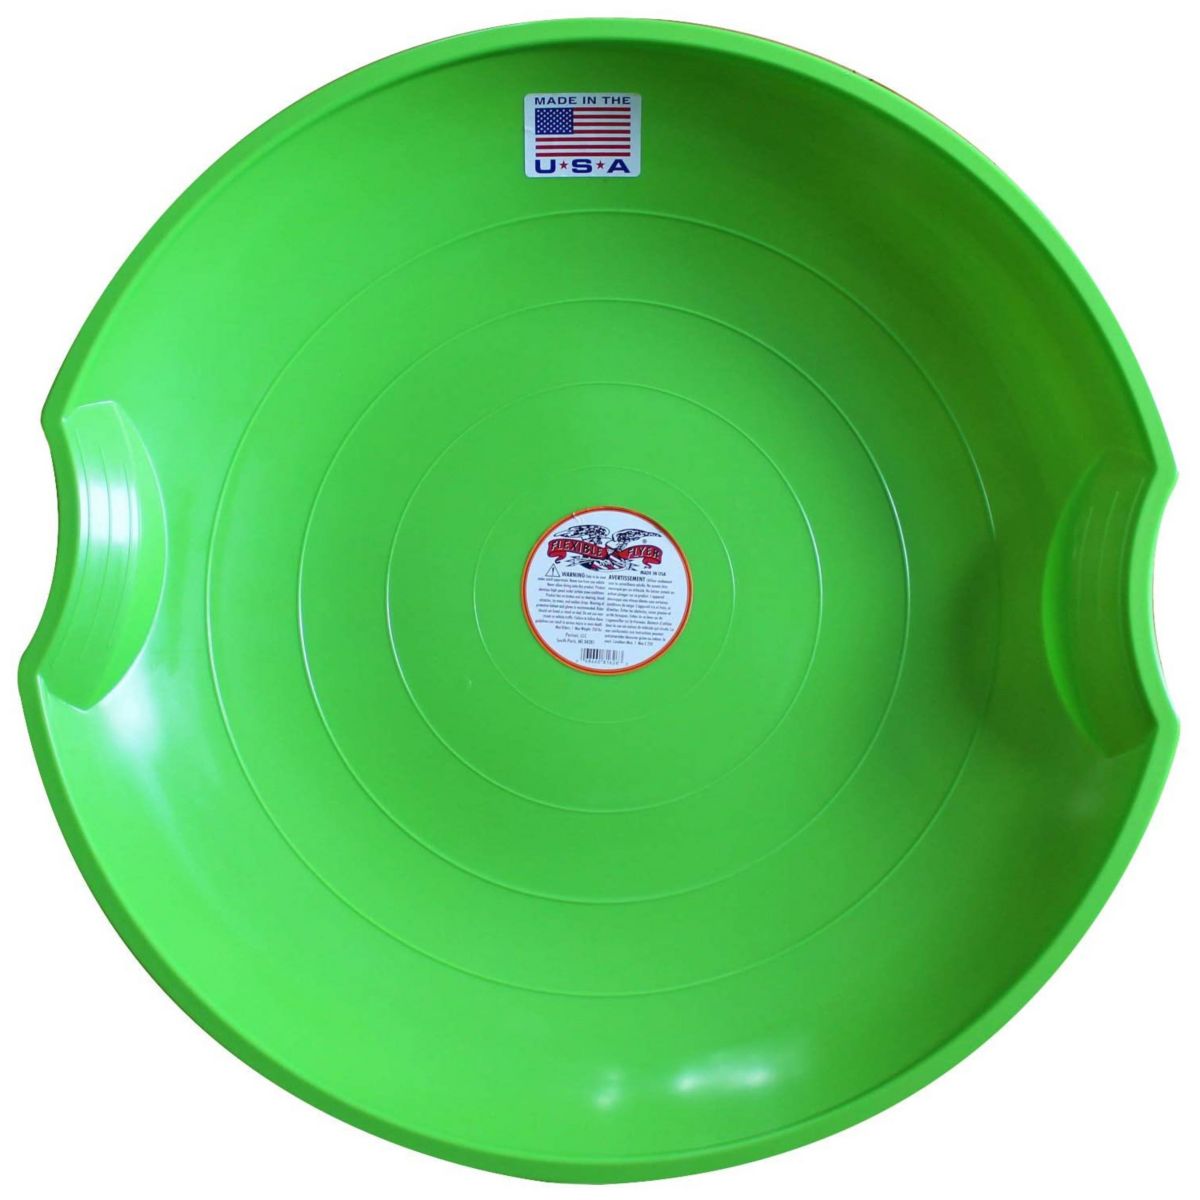 Paricon 626-G Гибкий флаер Летающая тарелка Снежные сани, диаметр 26 дюймов, зеленый Paricon